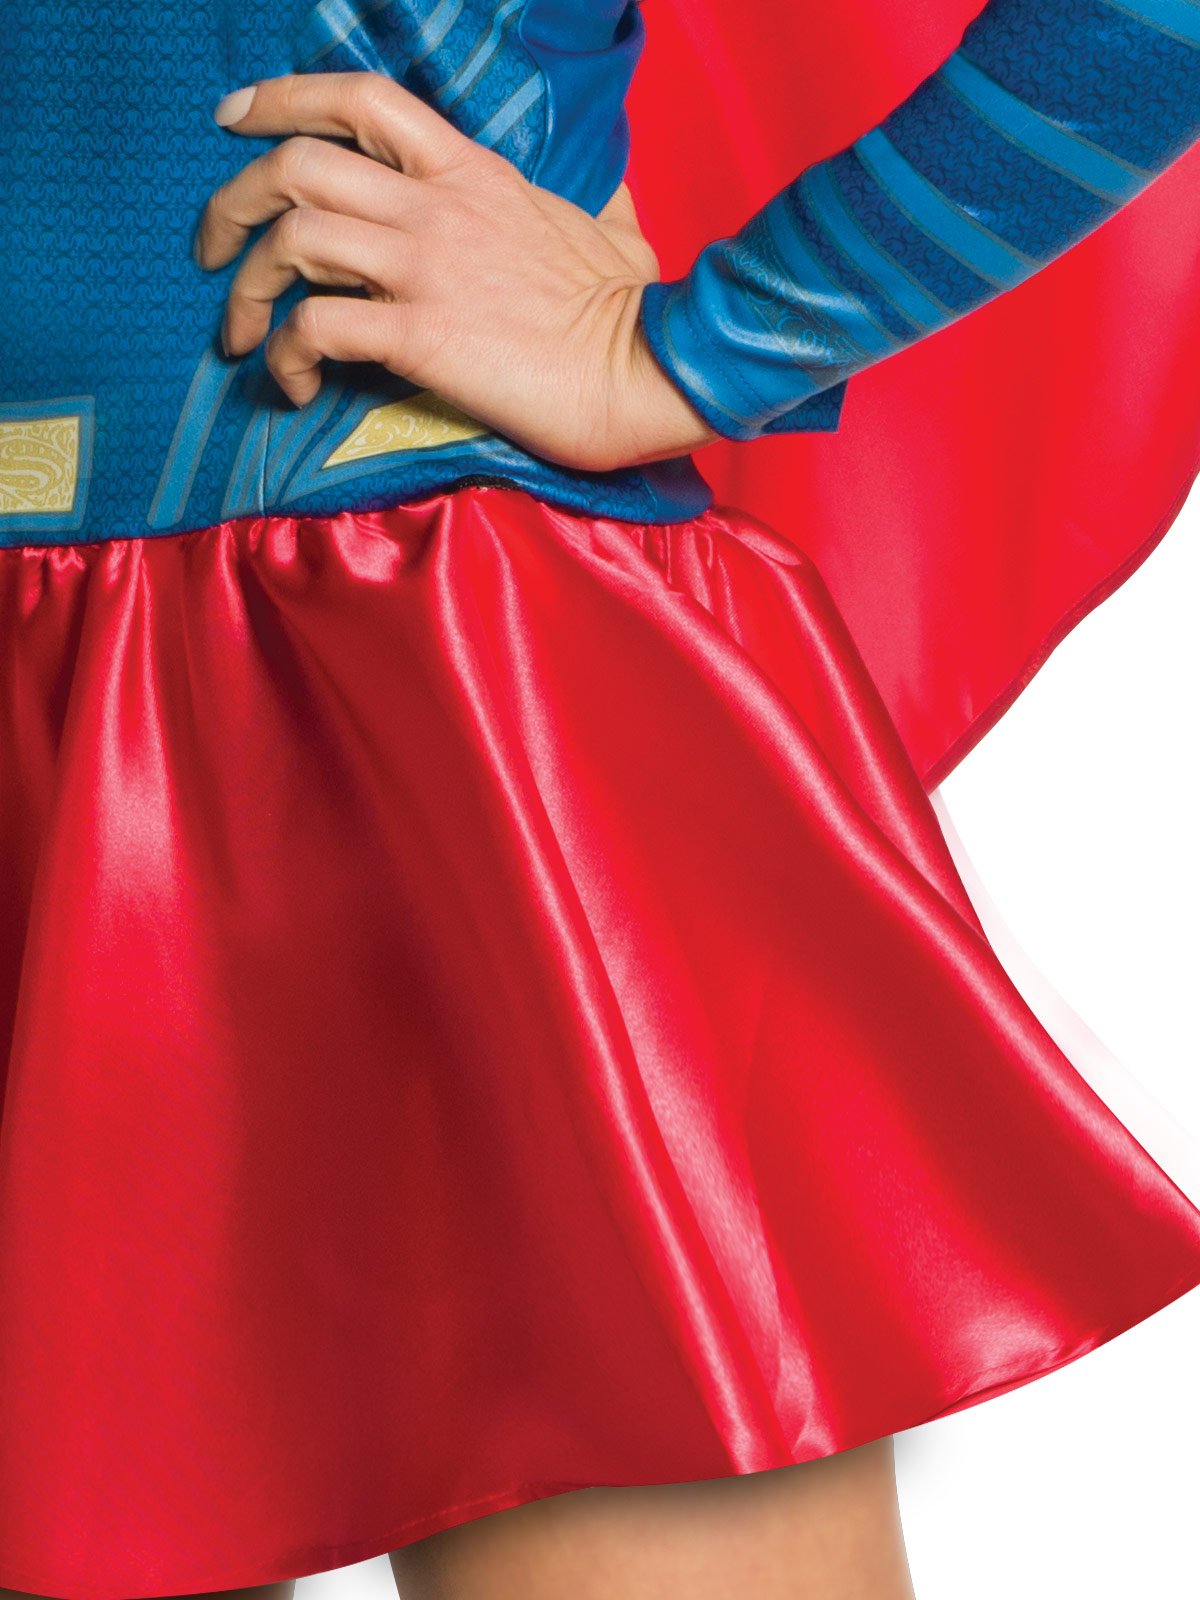 Costume Adult Supergirl Small